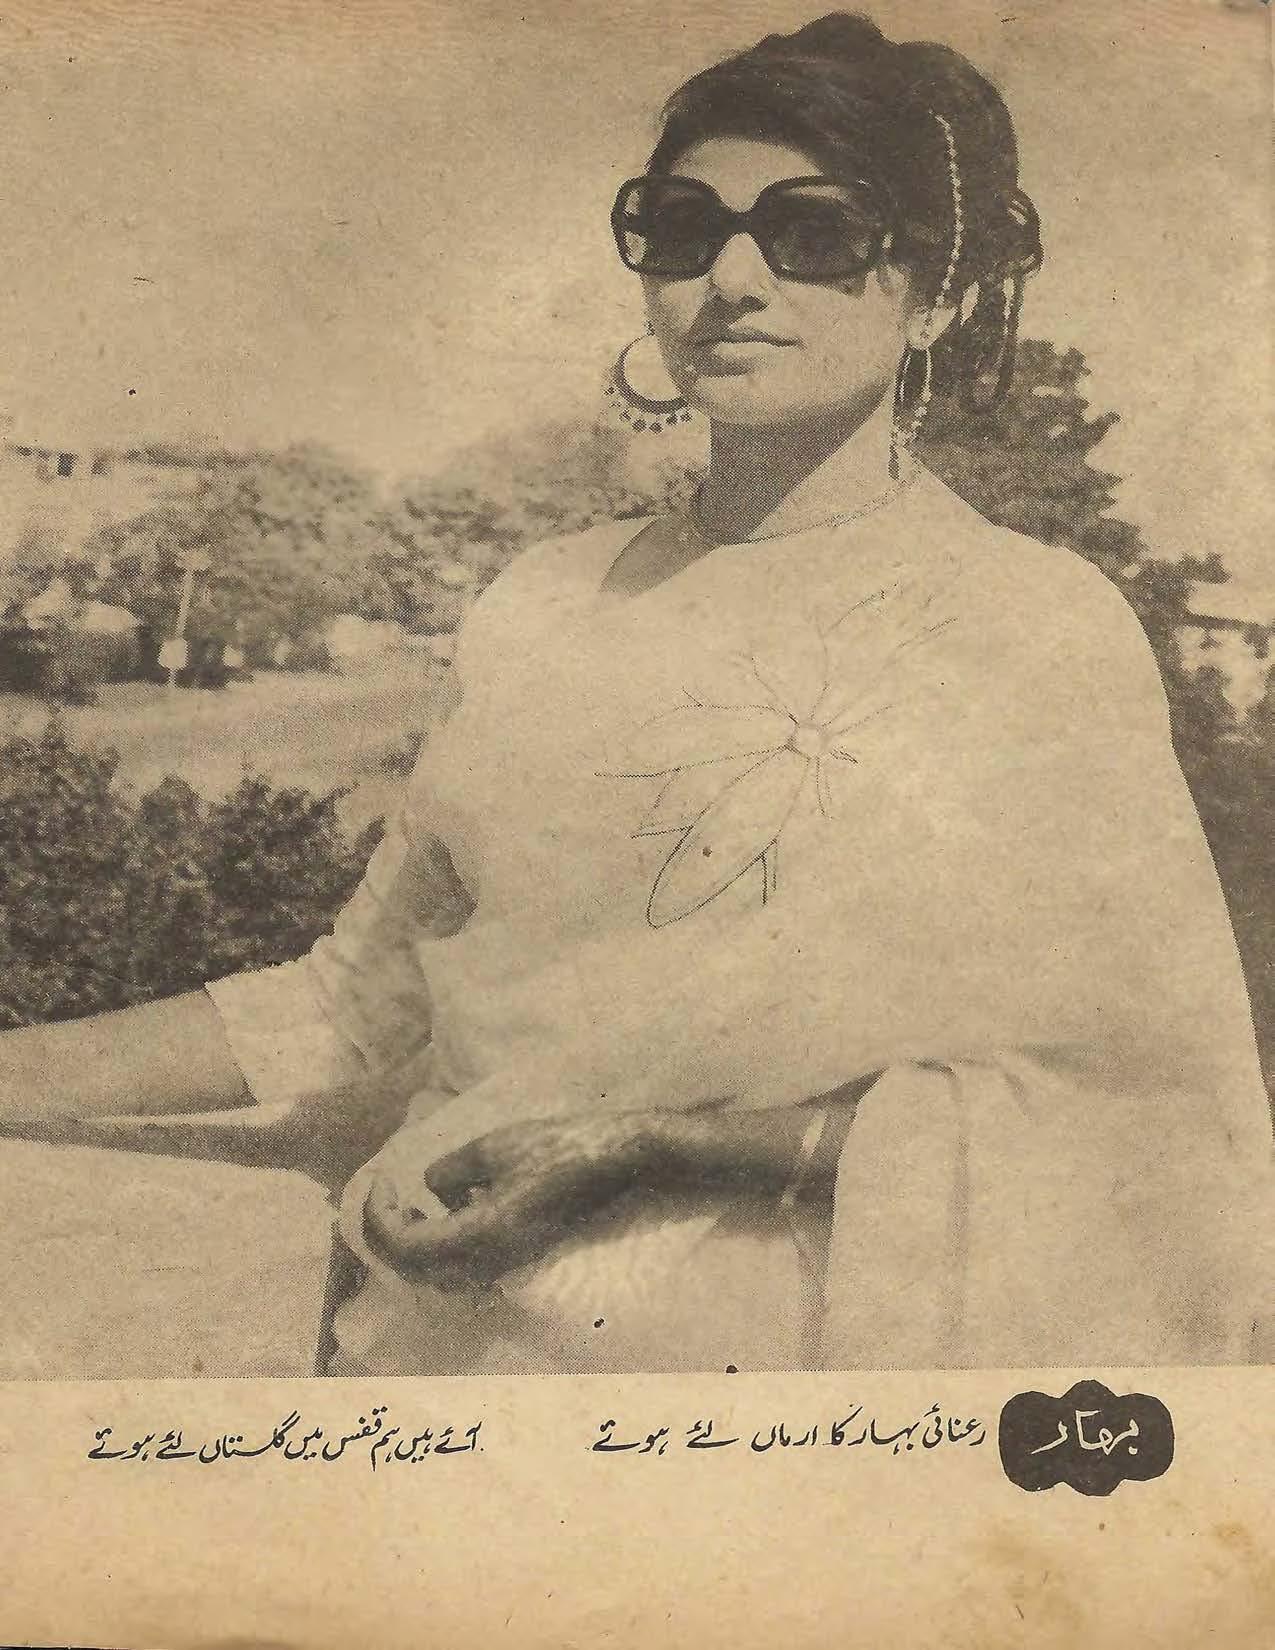 Shama (Nov, 1972) - KHAJISTAN™